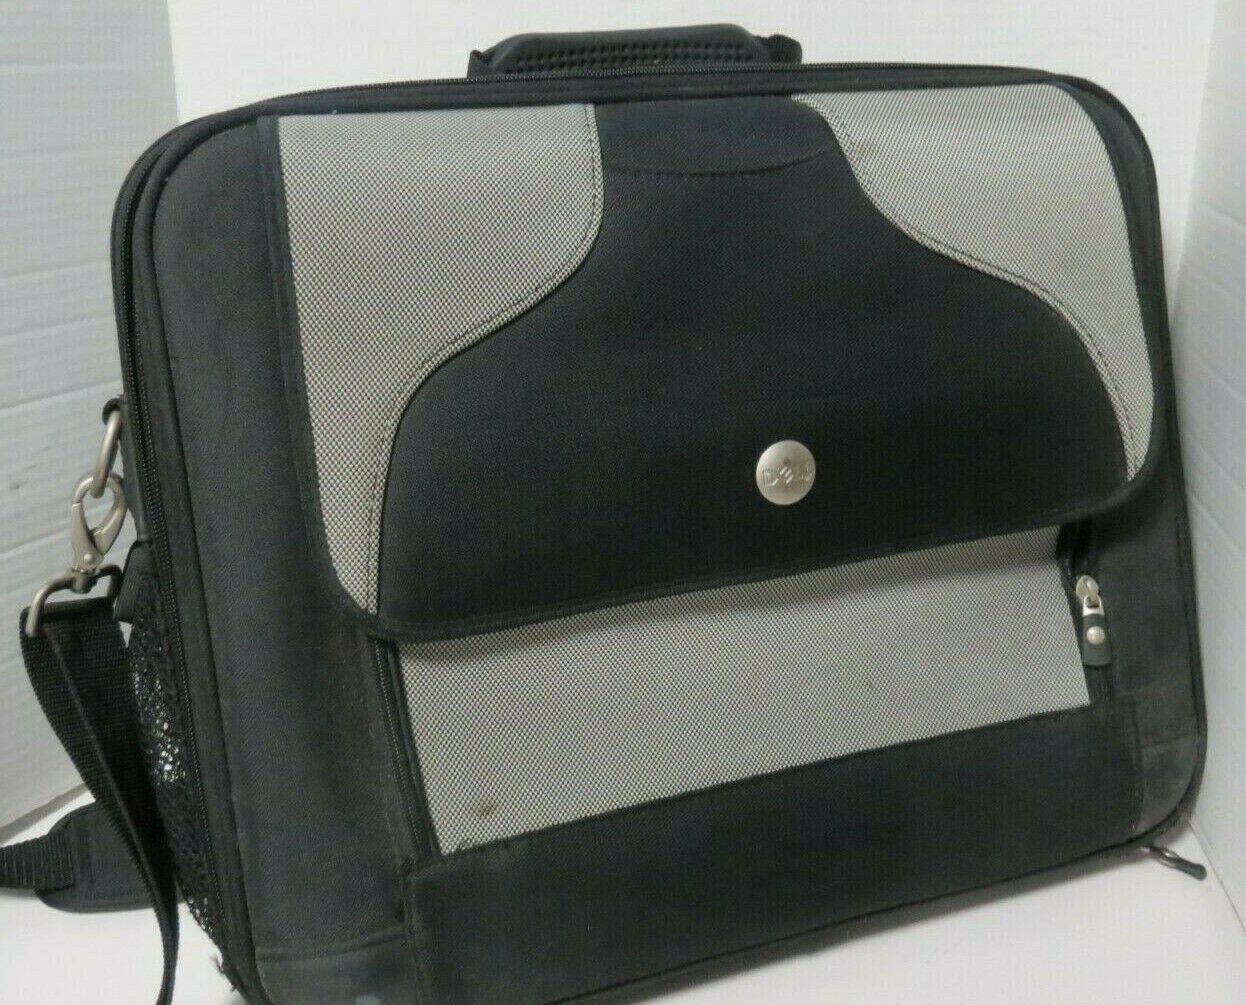 Primary image for Dell Computer Laptop Brief Case Carry On Shoulder Organizer Bag Black Grey